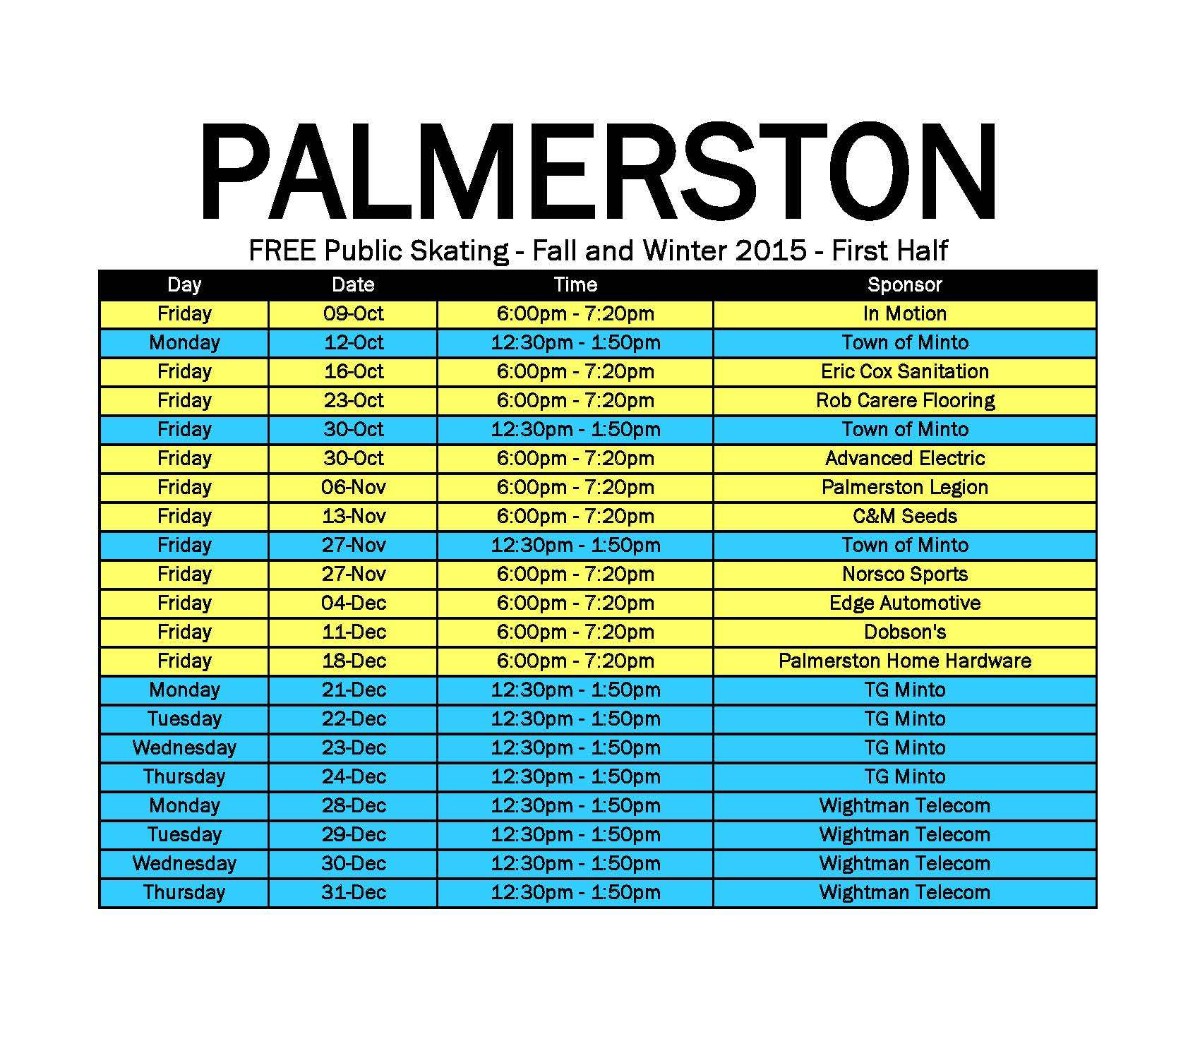 15-16_Public_Skating_1st_Half_Palmerston.jpg